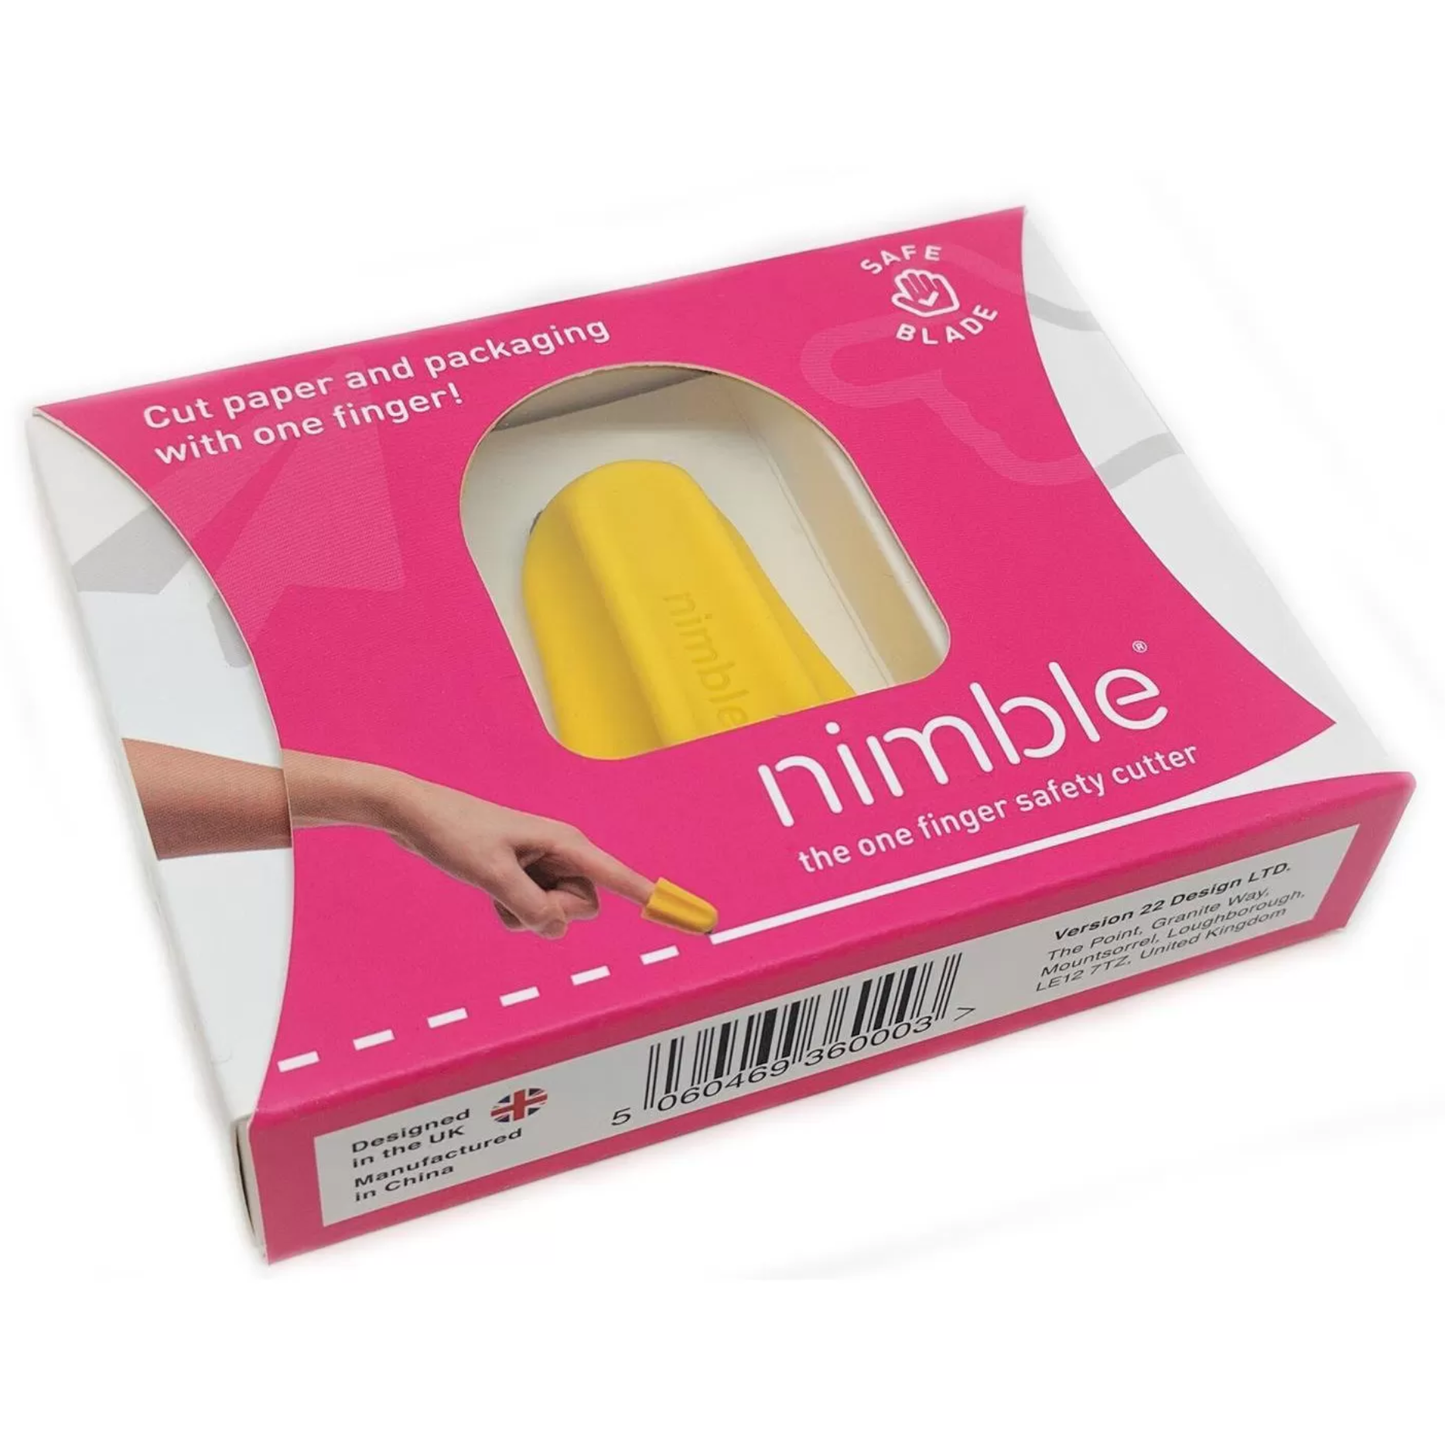 Nimble one-finger cutter